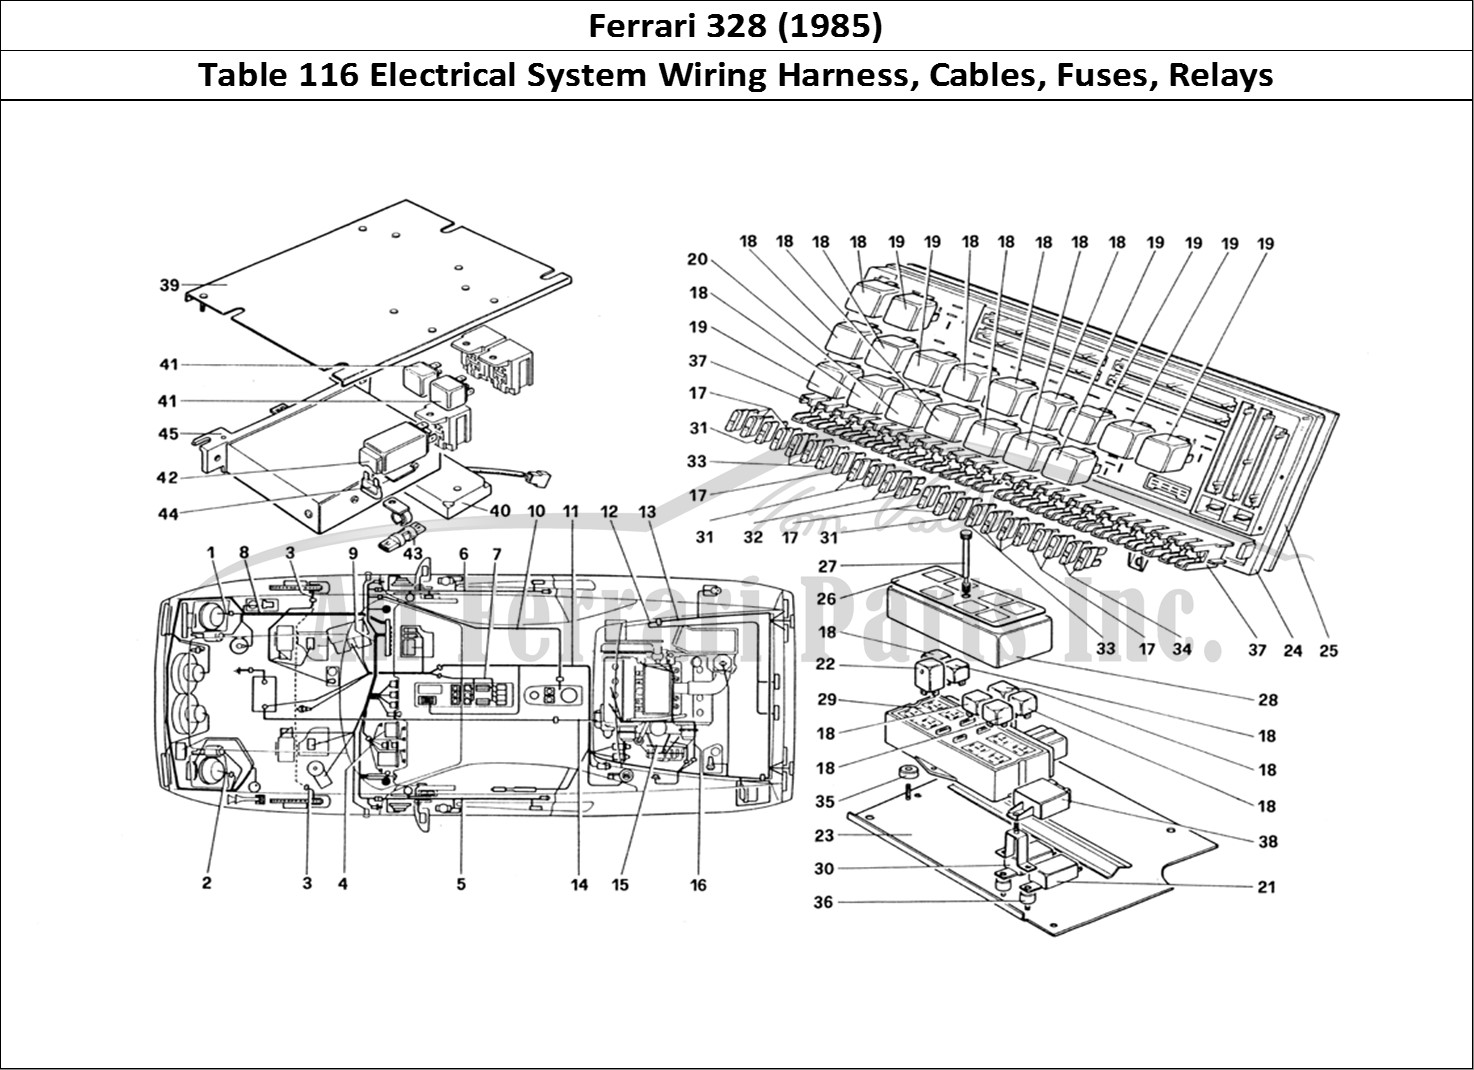 Ferrari Parts Ferrari 328 (1985) Page 116 Electrical System - Cable